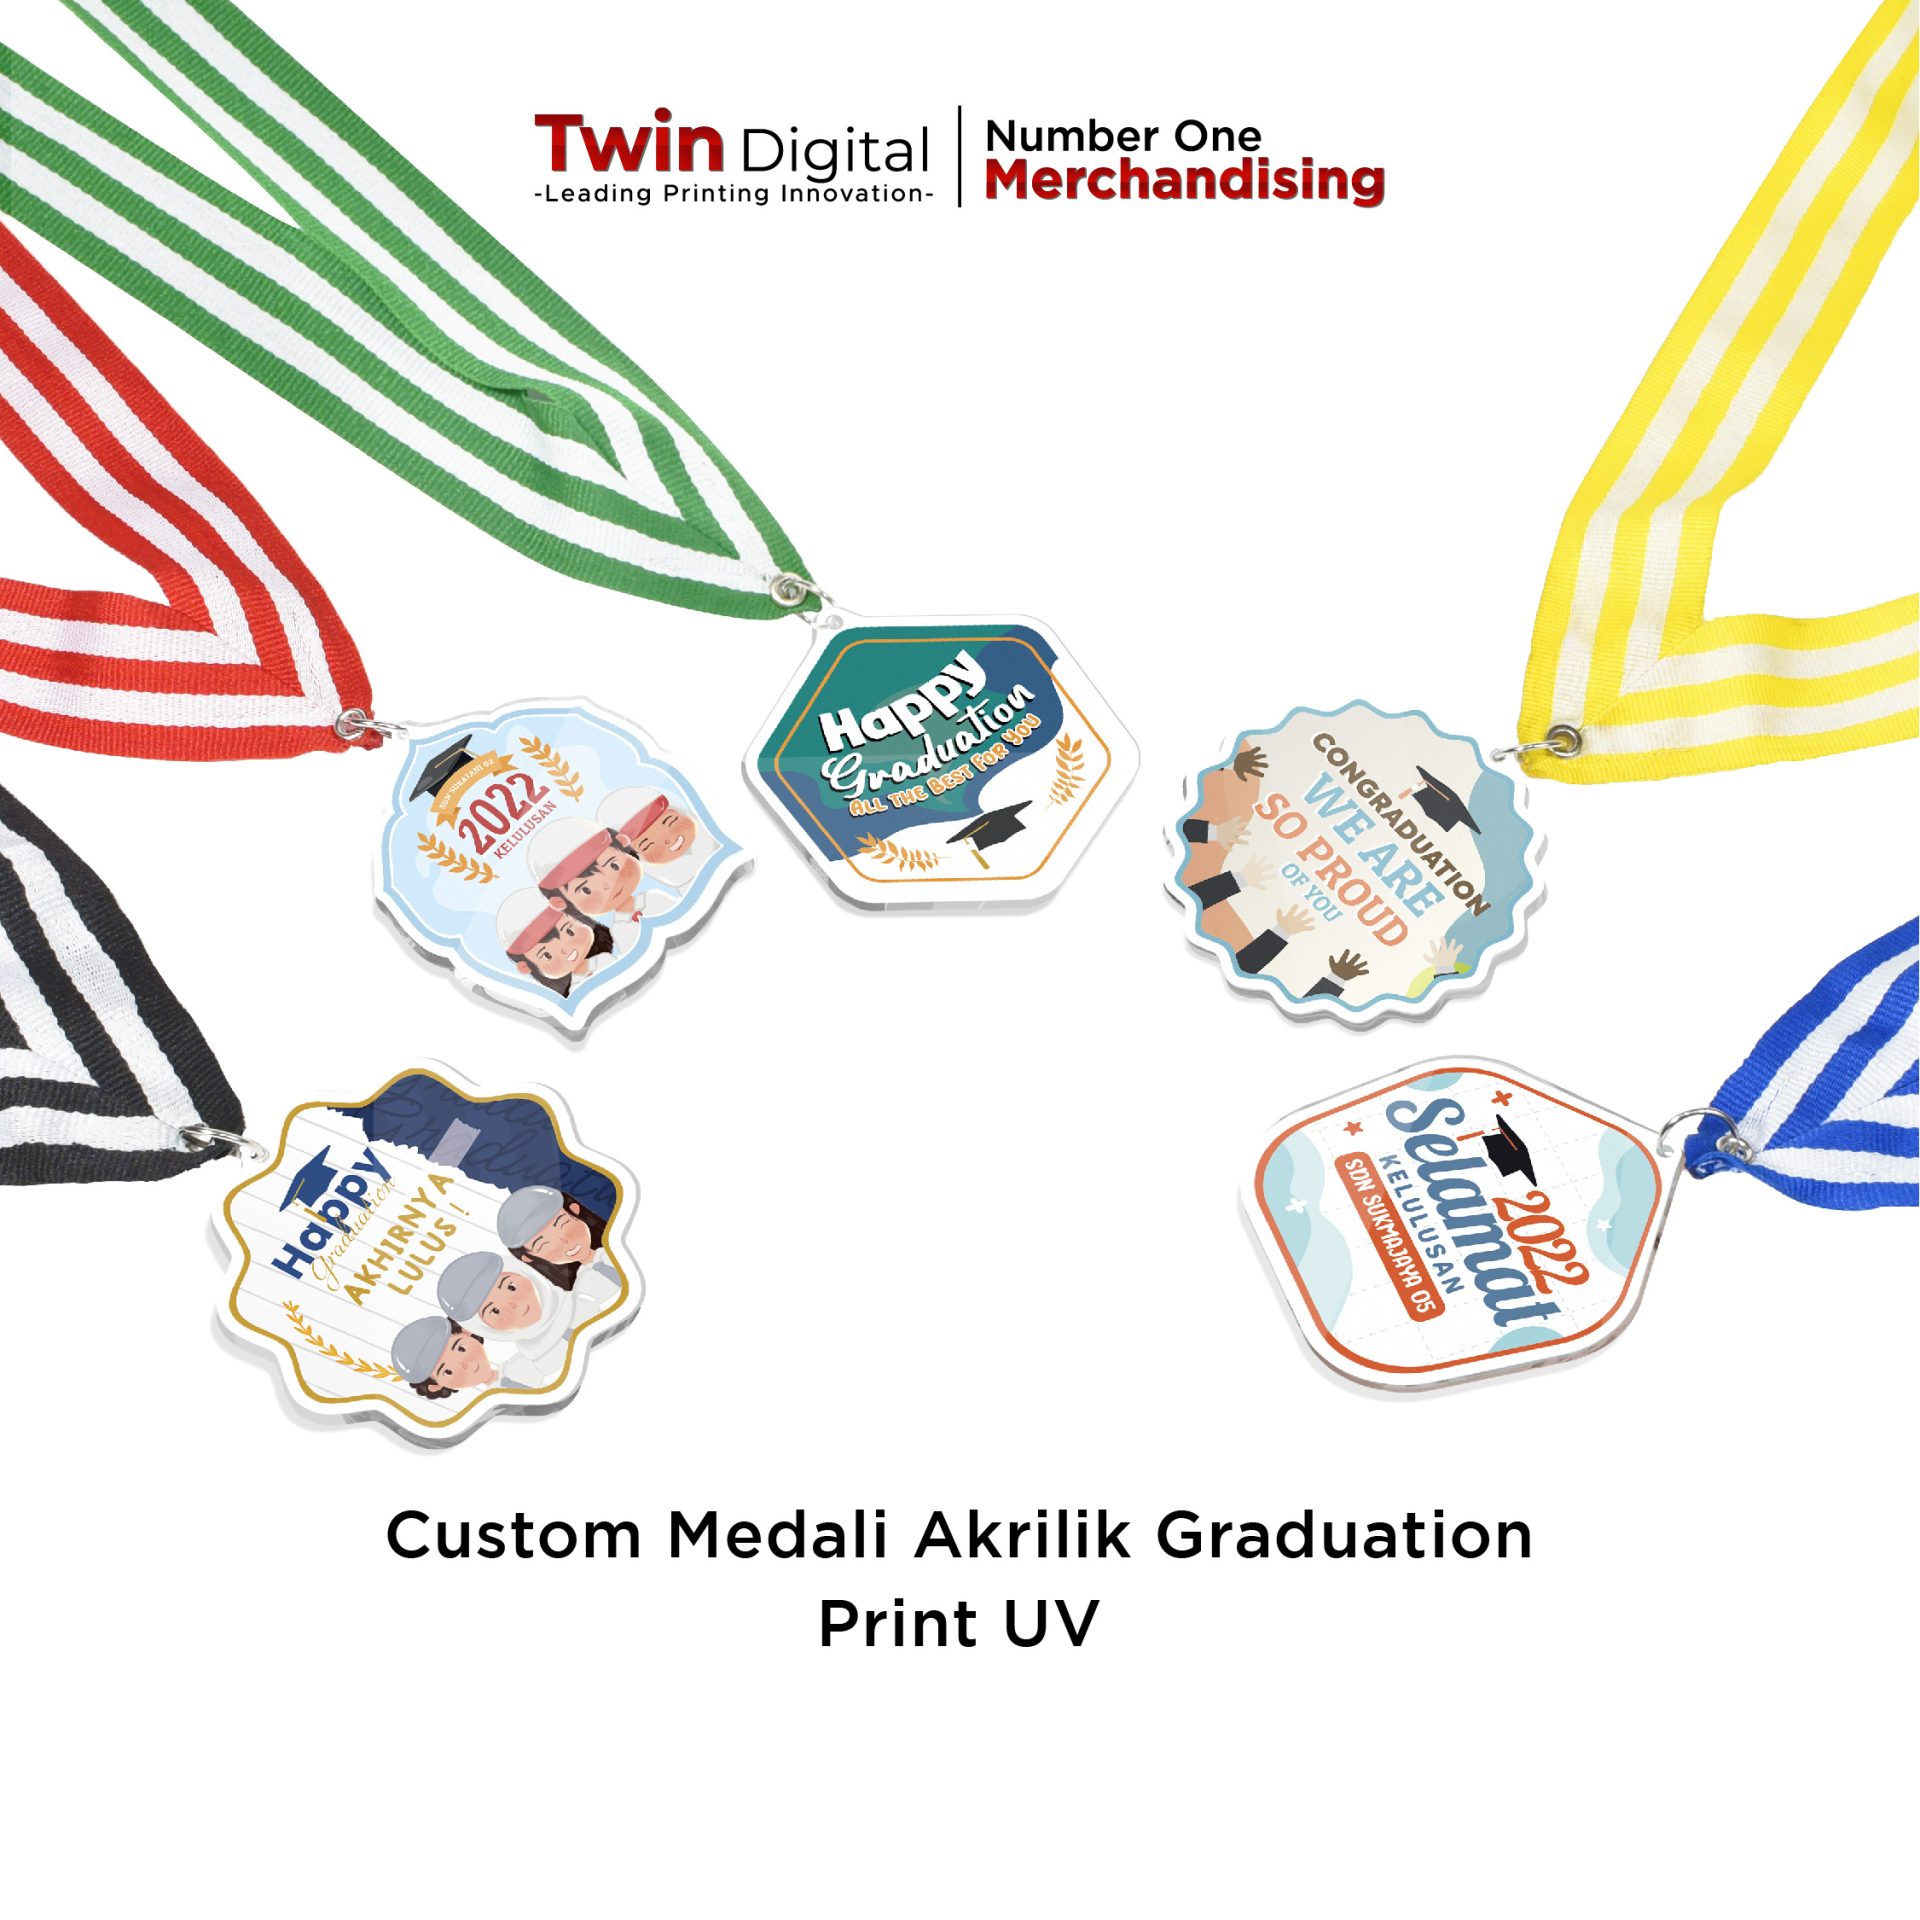 Medali Akrilik Graduation Sekolah_Medali Teks Graduation-01